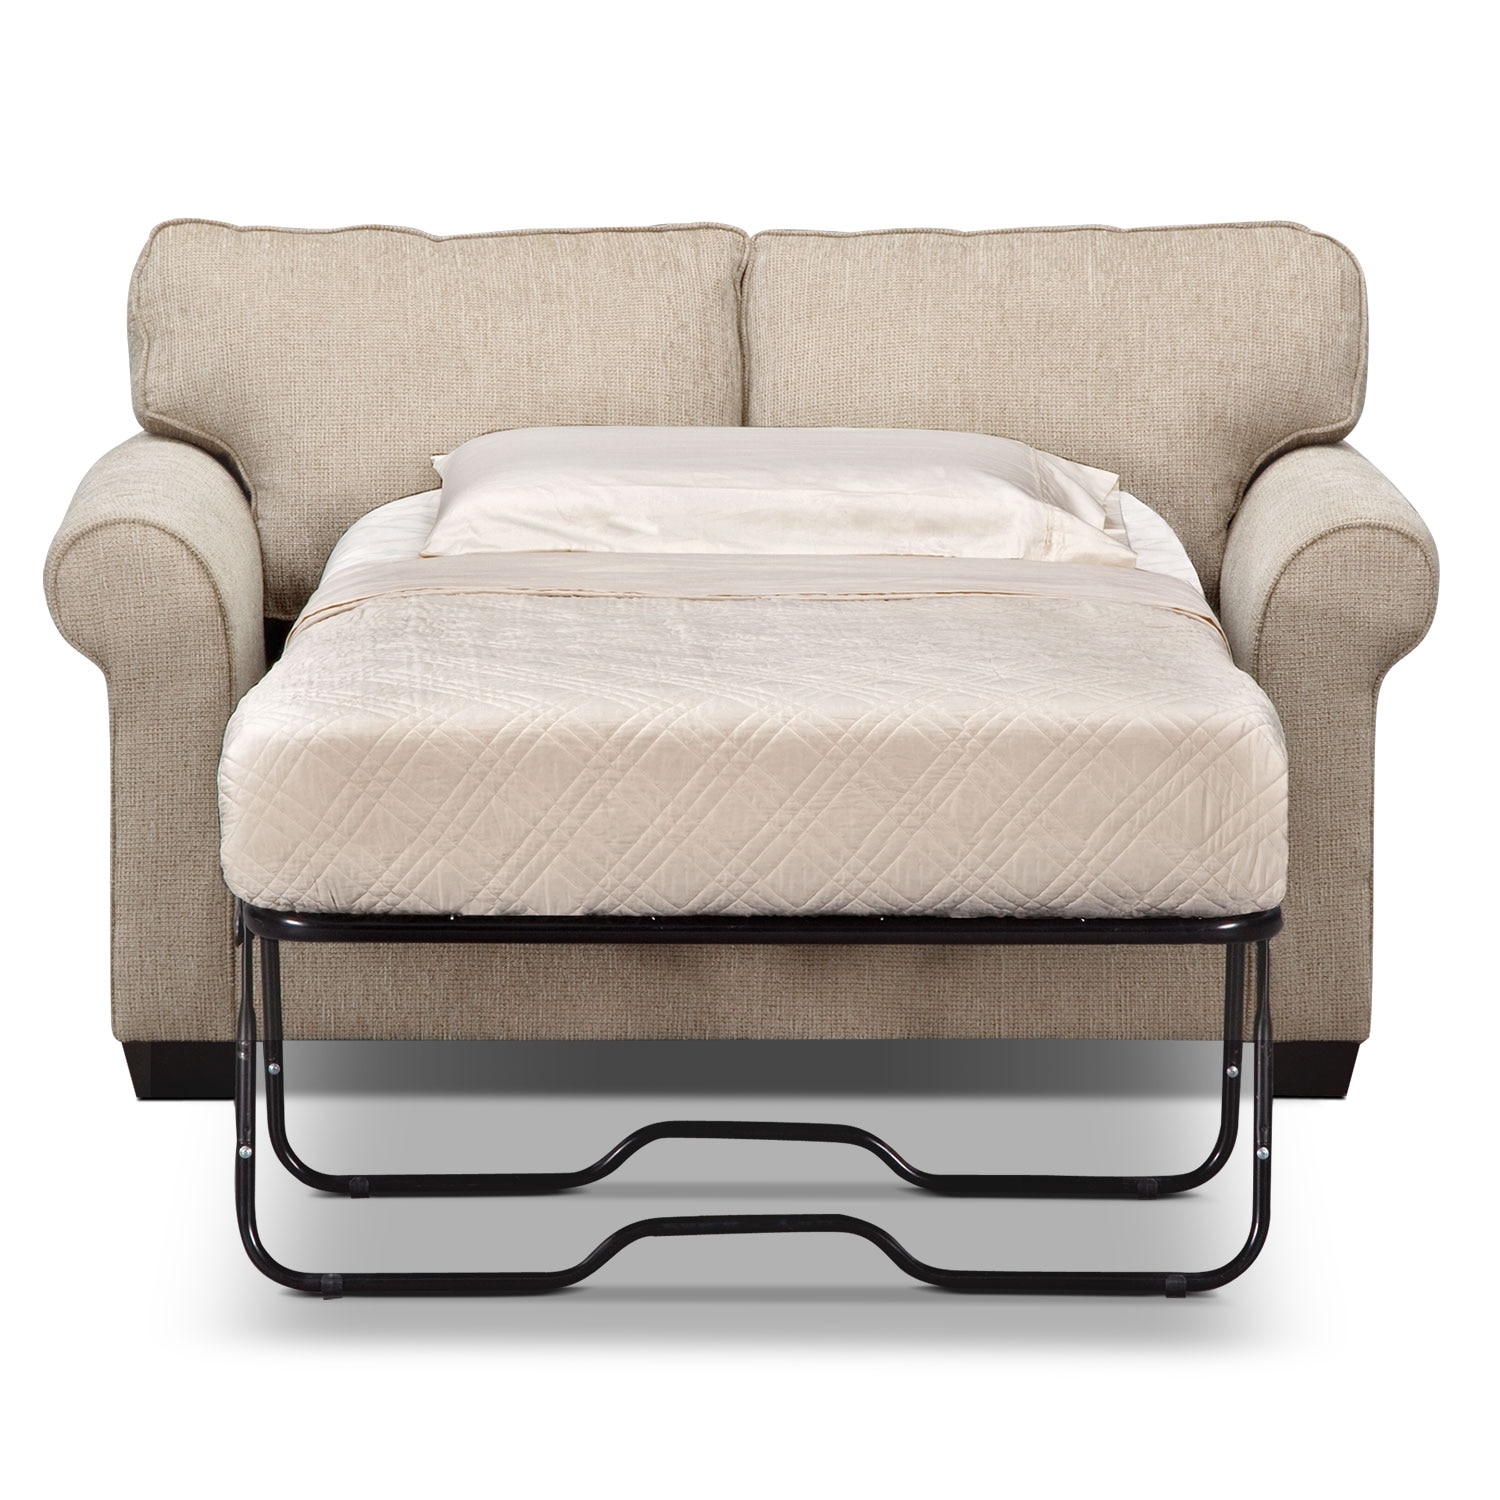 Fletcher Twin Memory Foam Sleeper Sofa - Beige | Value City Furniture